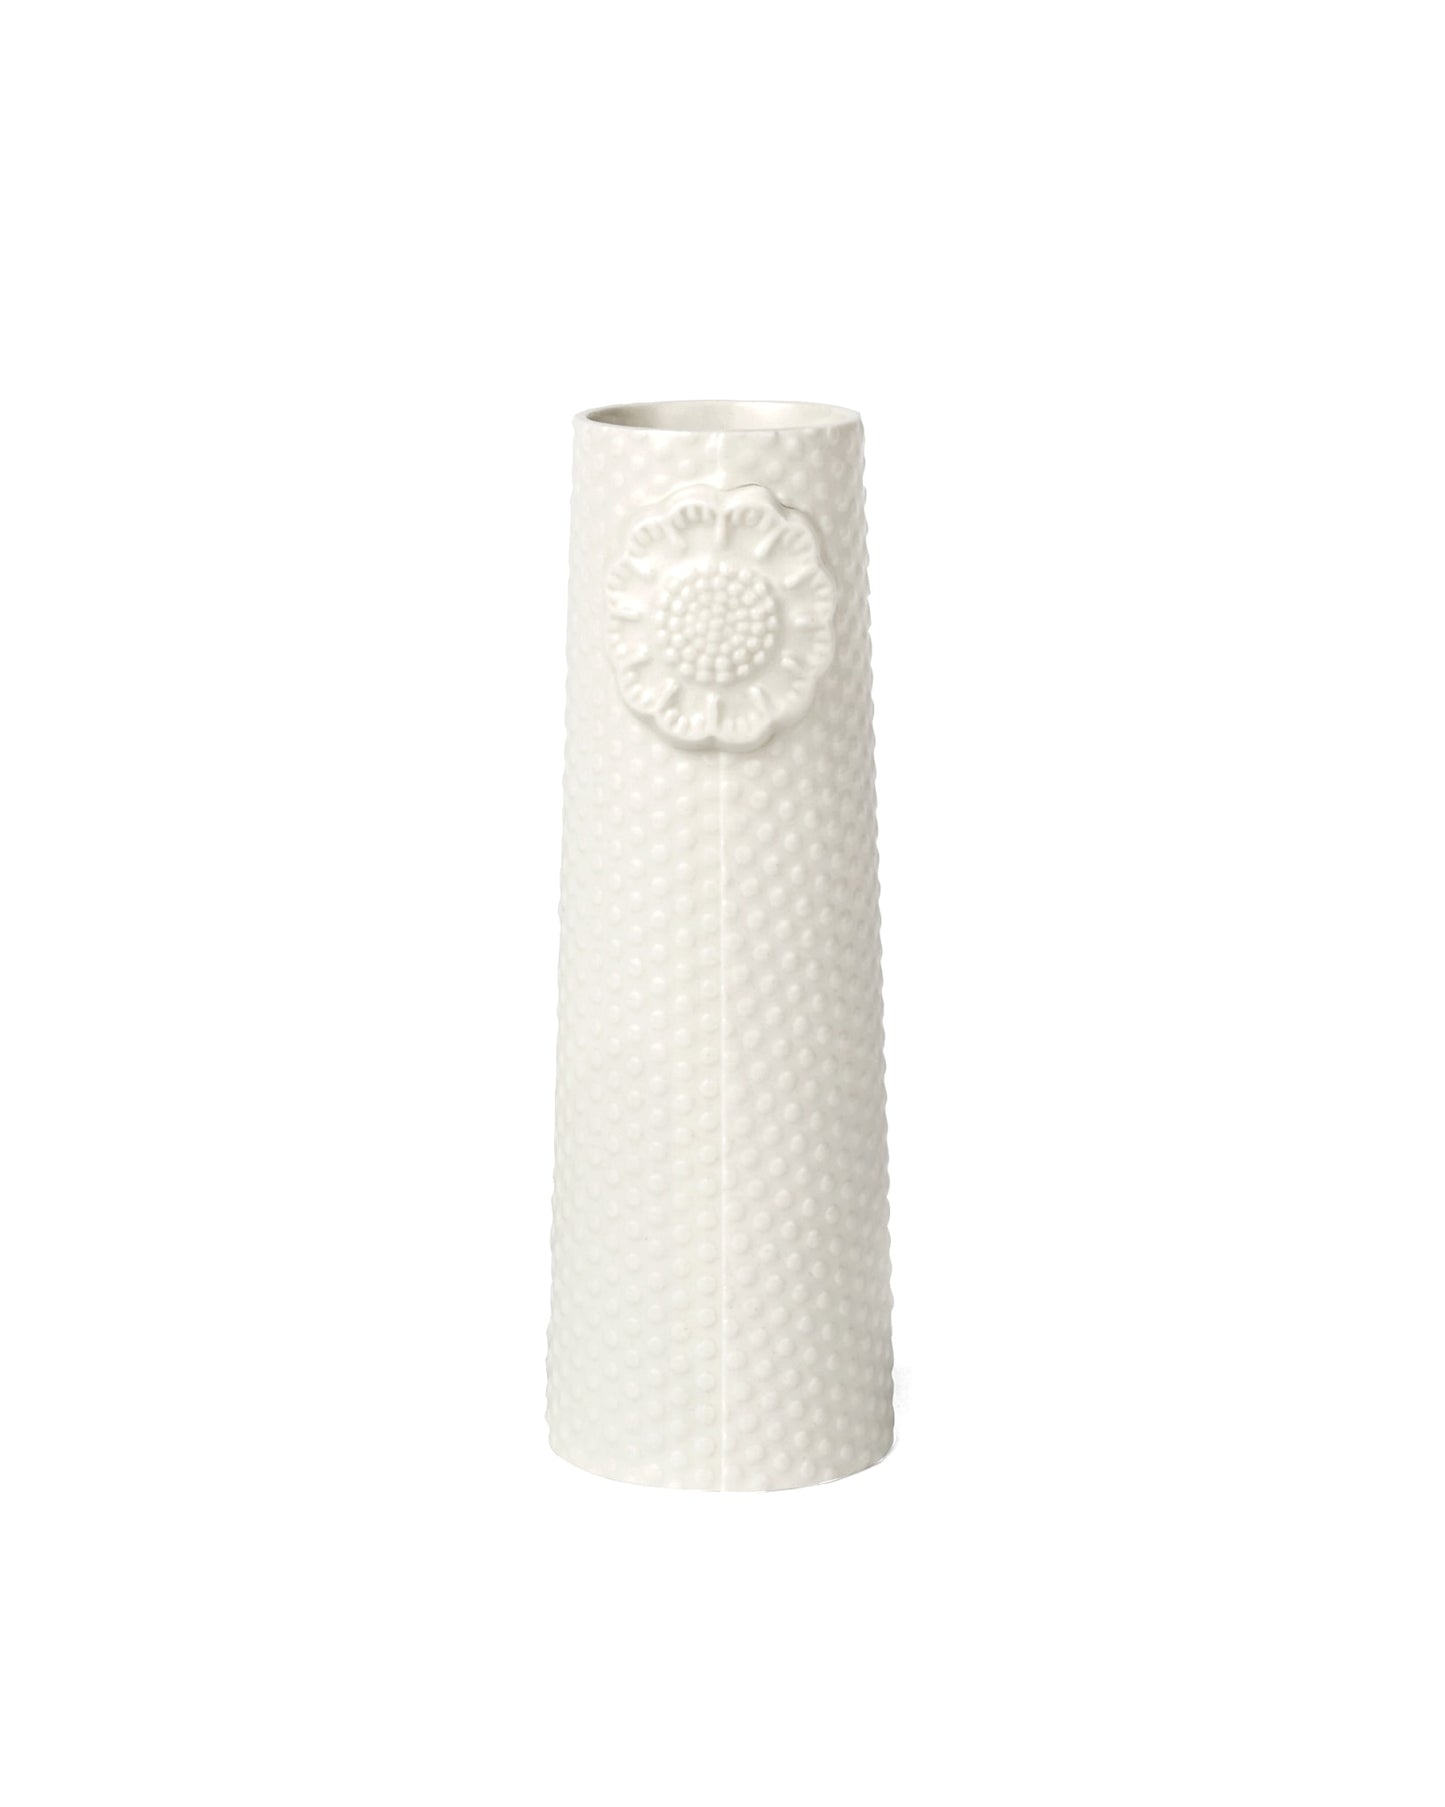 Pipanella Dot Small White vase